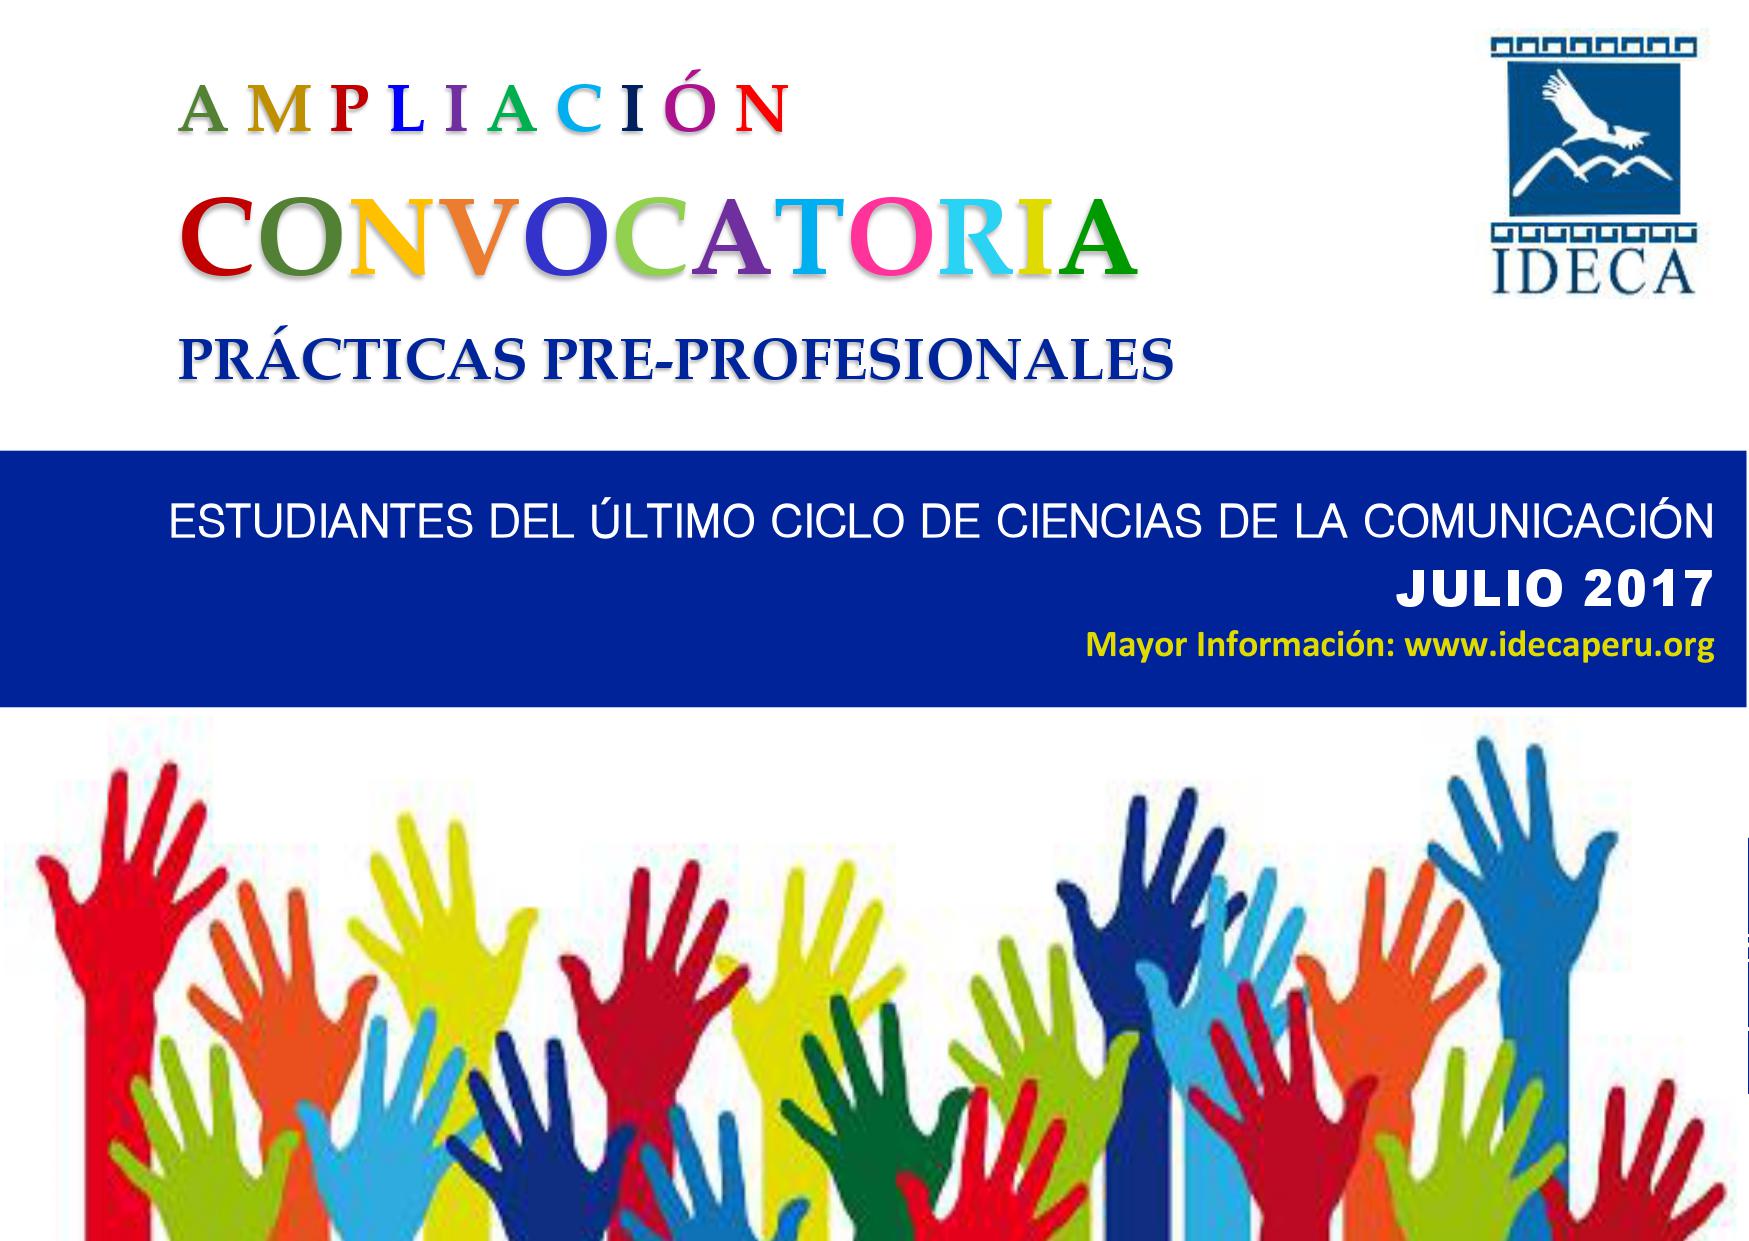 AMPLIACIÓN CONVOCATORIA: Prácticas Pre-Profesionales en Comunicación IDECA 2017